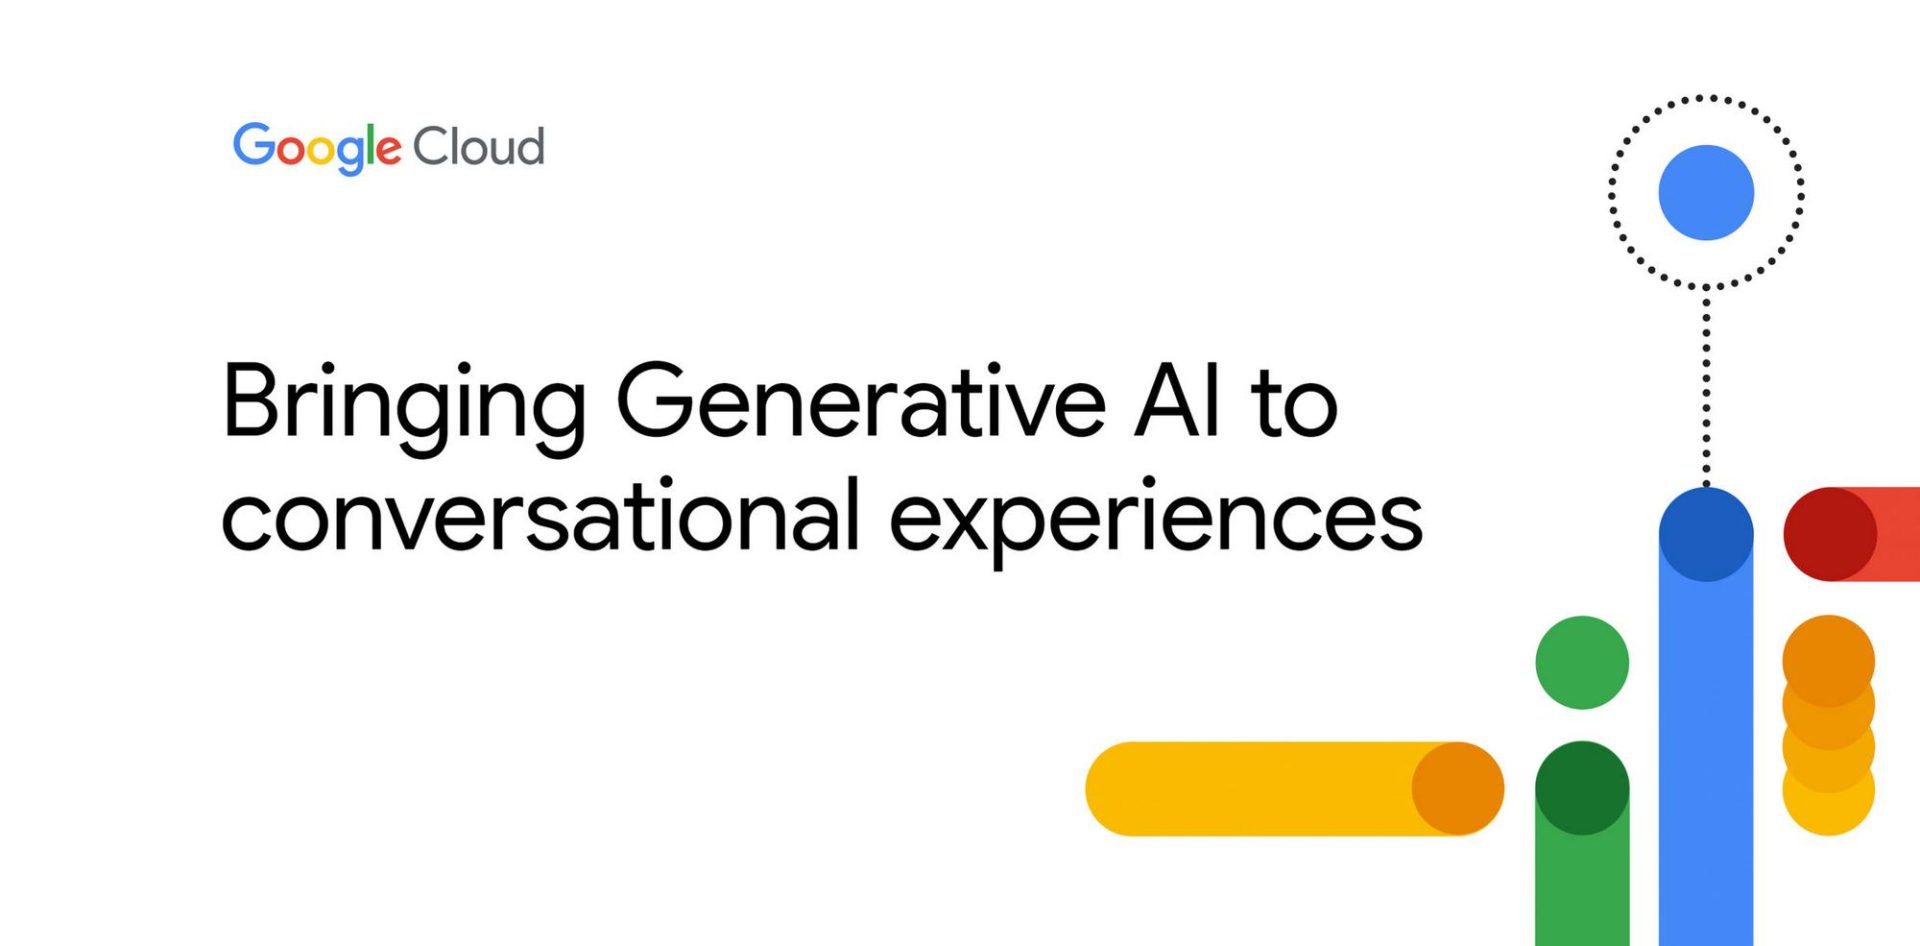 Bringing generative AI to conversational experiences